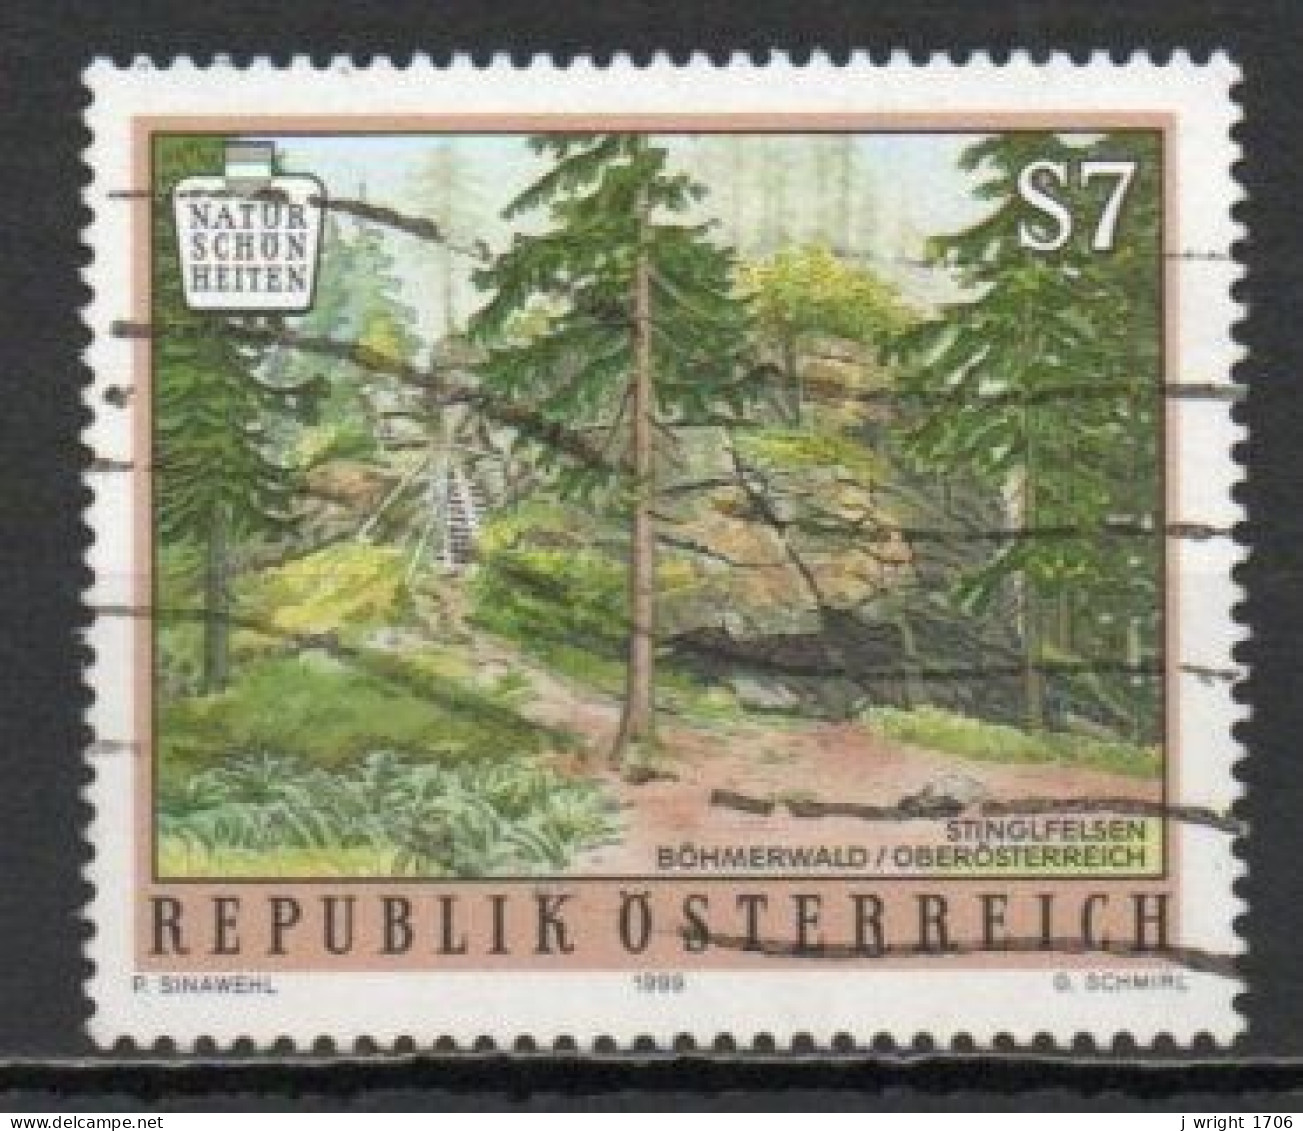 Austria, 1999, Austrian Natural Beauty/Stinglfelsen, 7s, USED - Usati